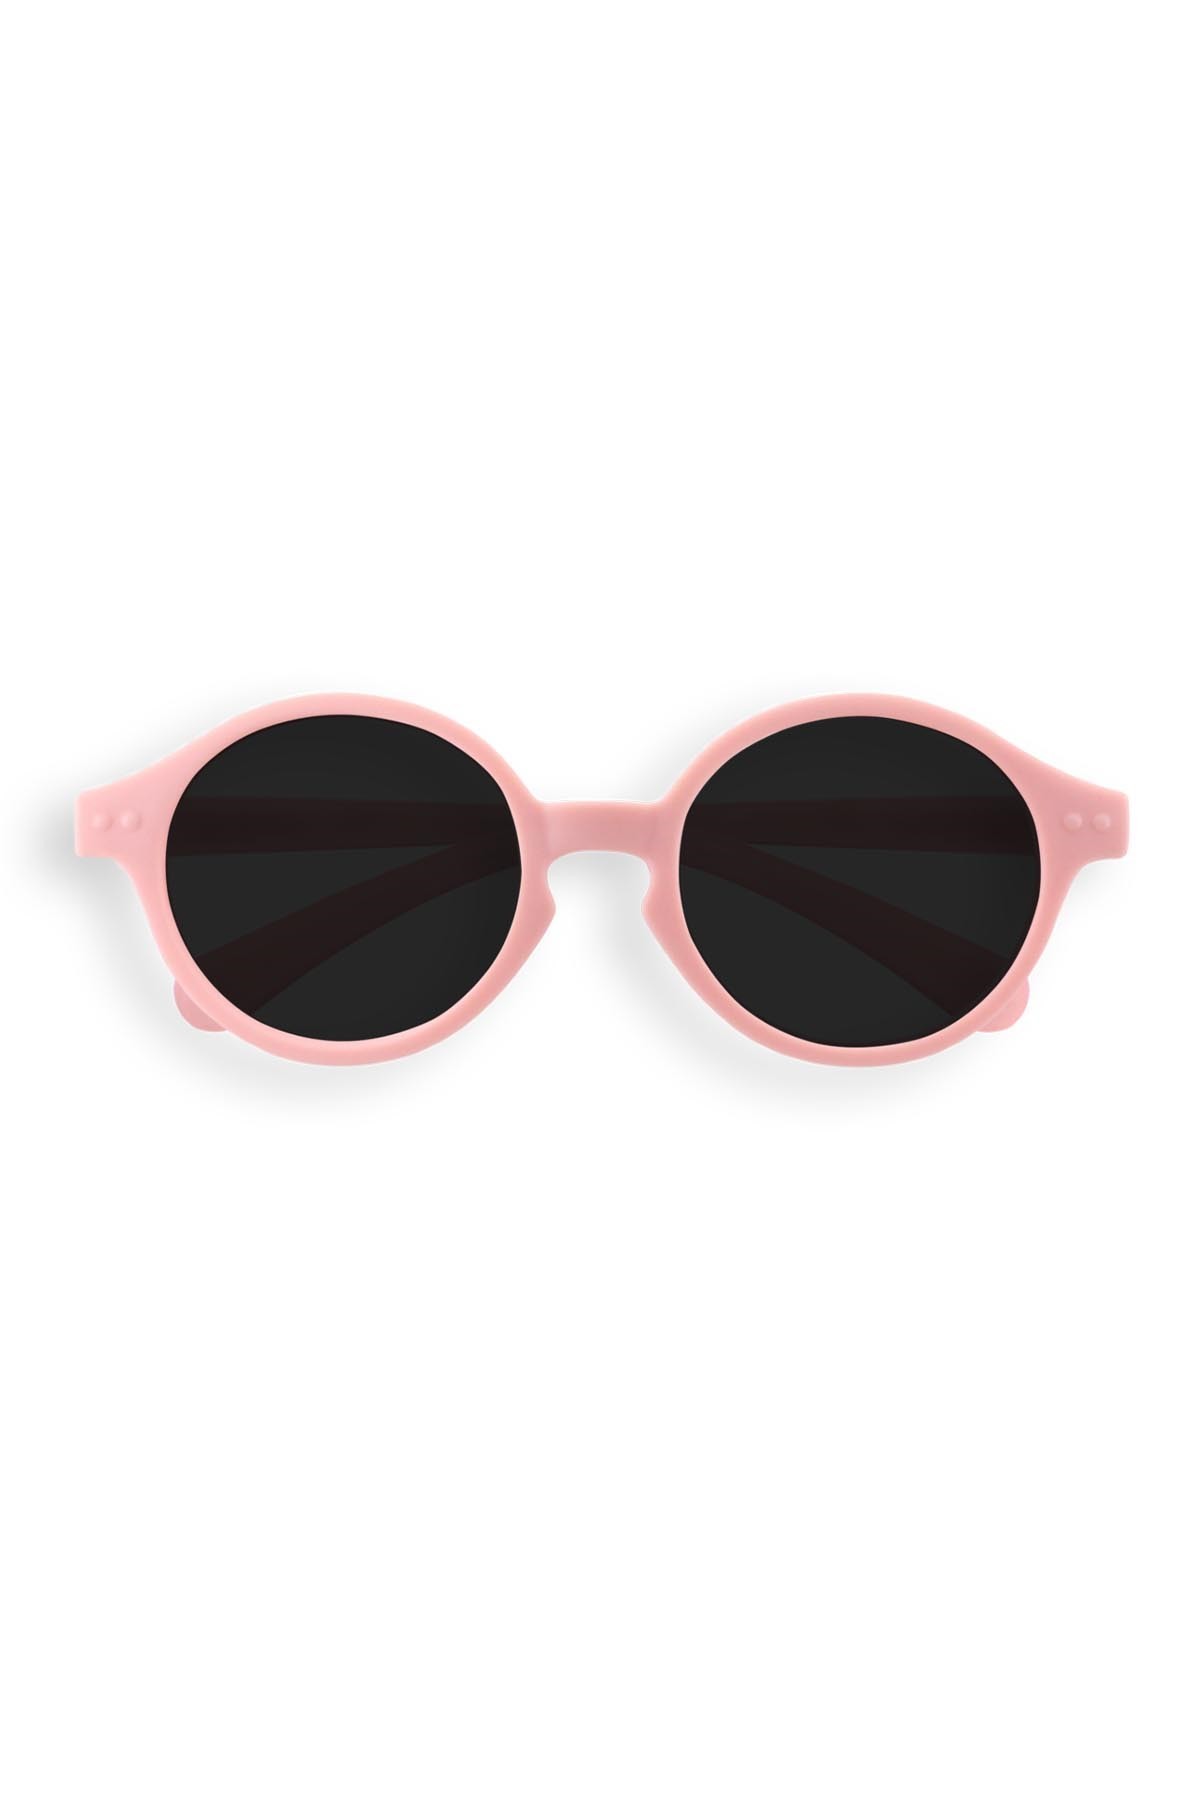 İzipizi Baby Güneş Gözlüğü Pastel Pink Pembe